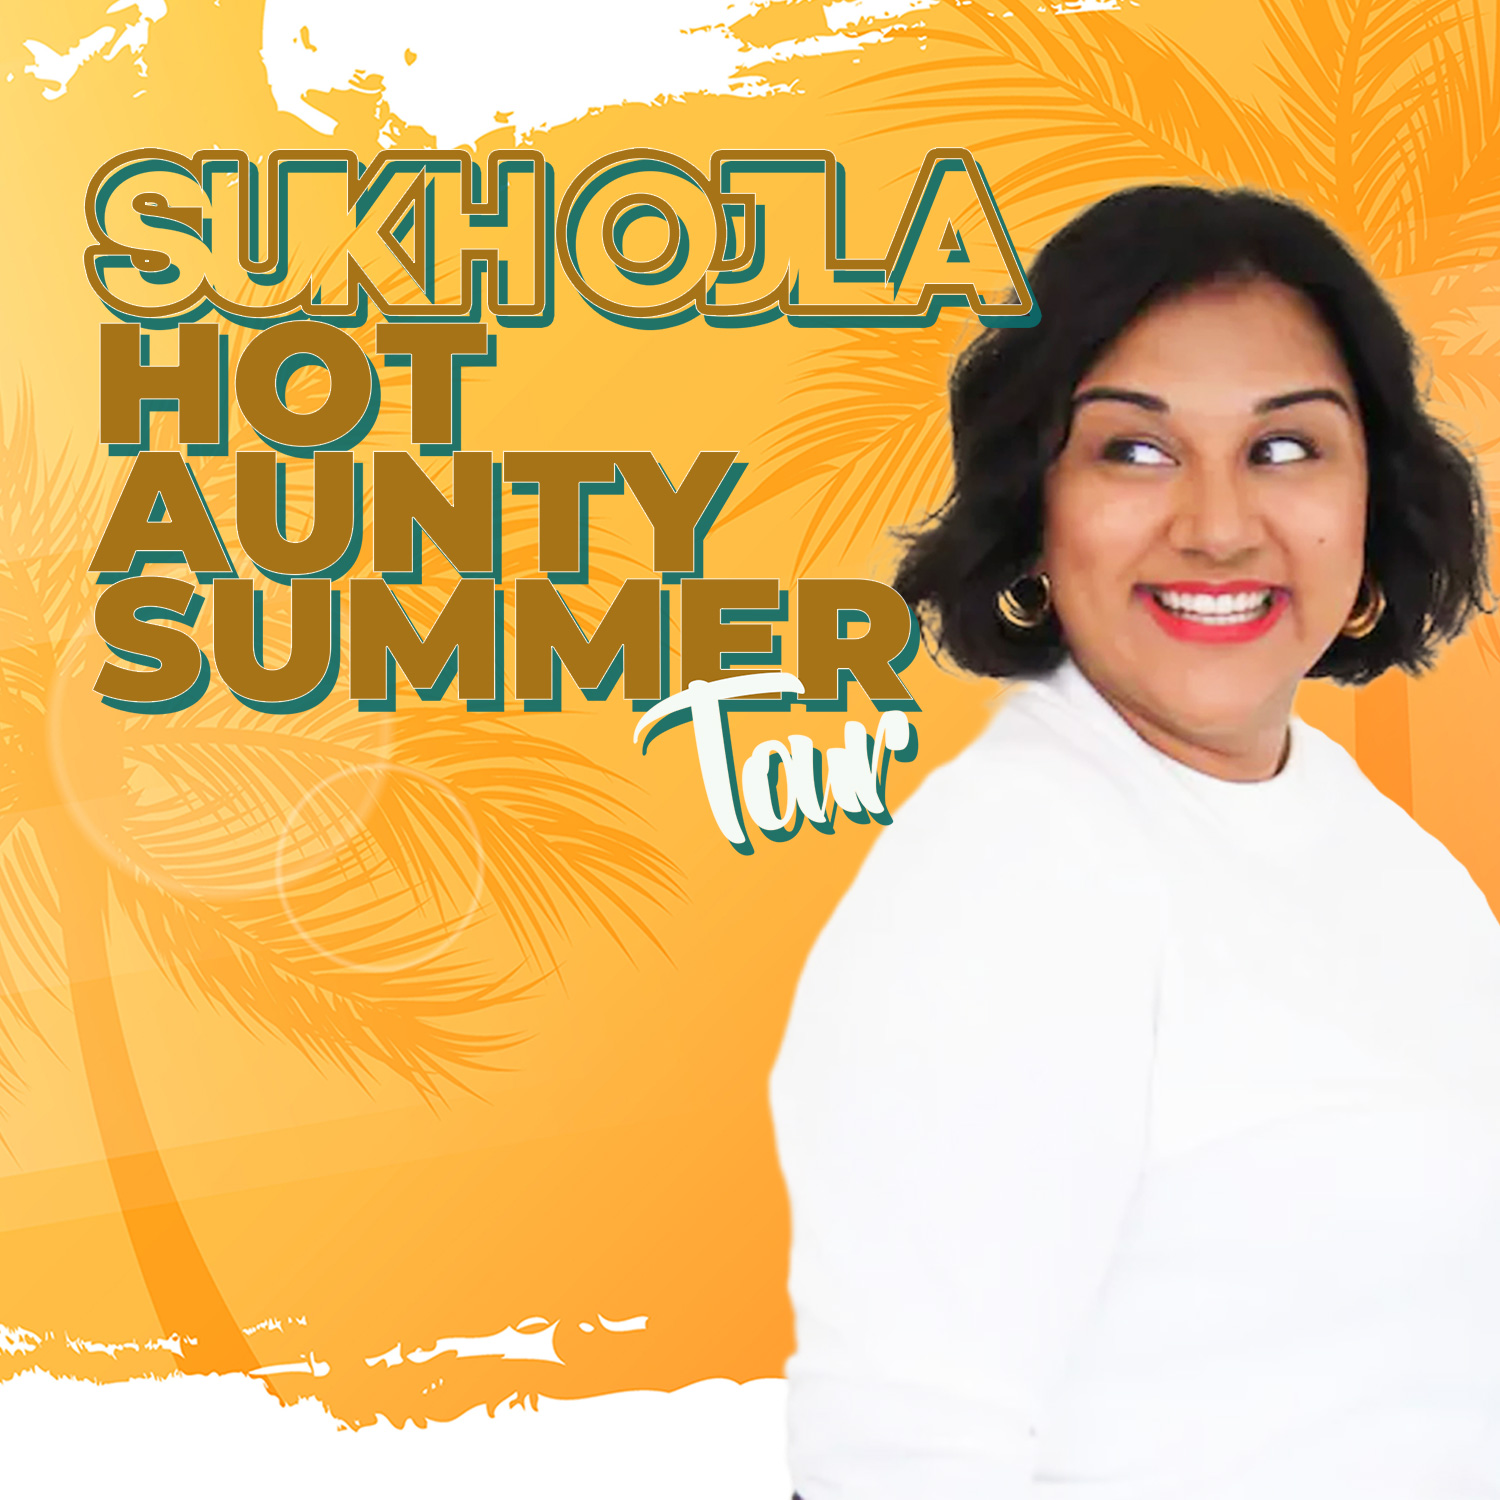 Sukh-Ojla-Hot-Aunty-Summer1696348273.jpg